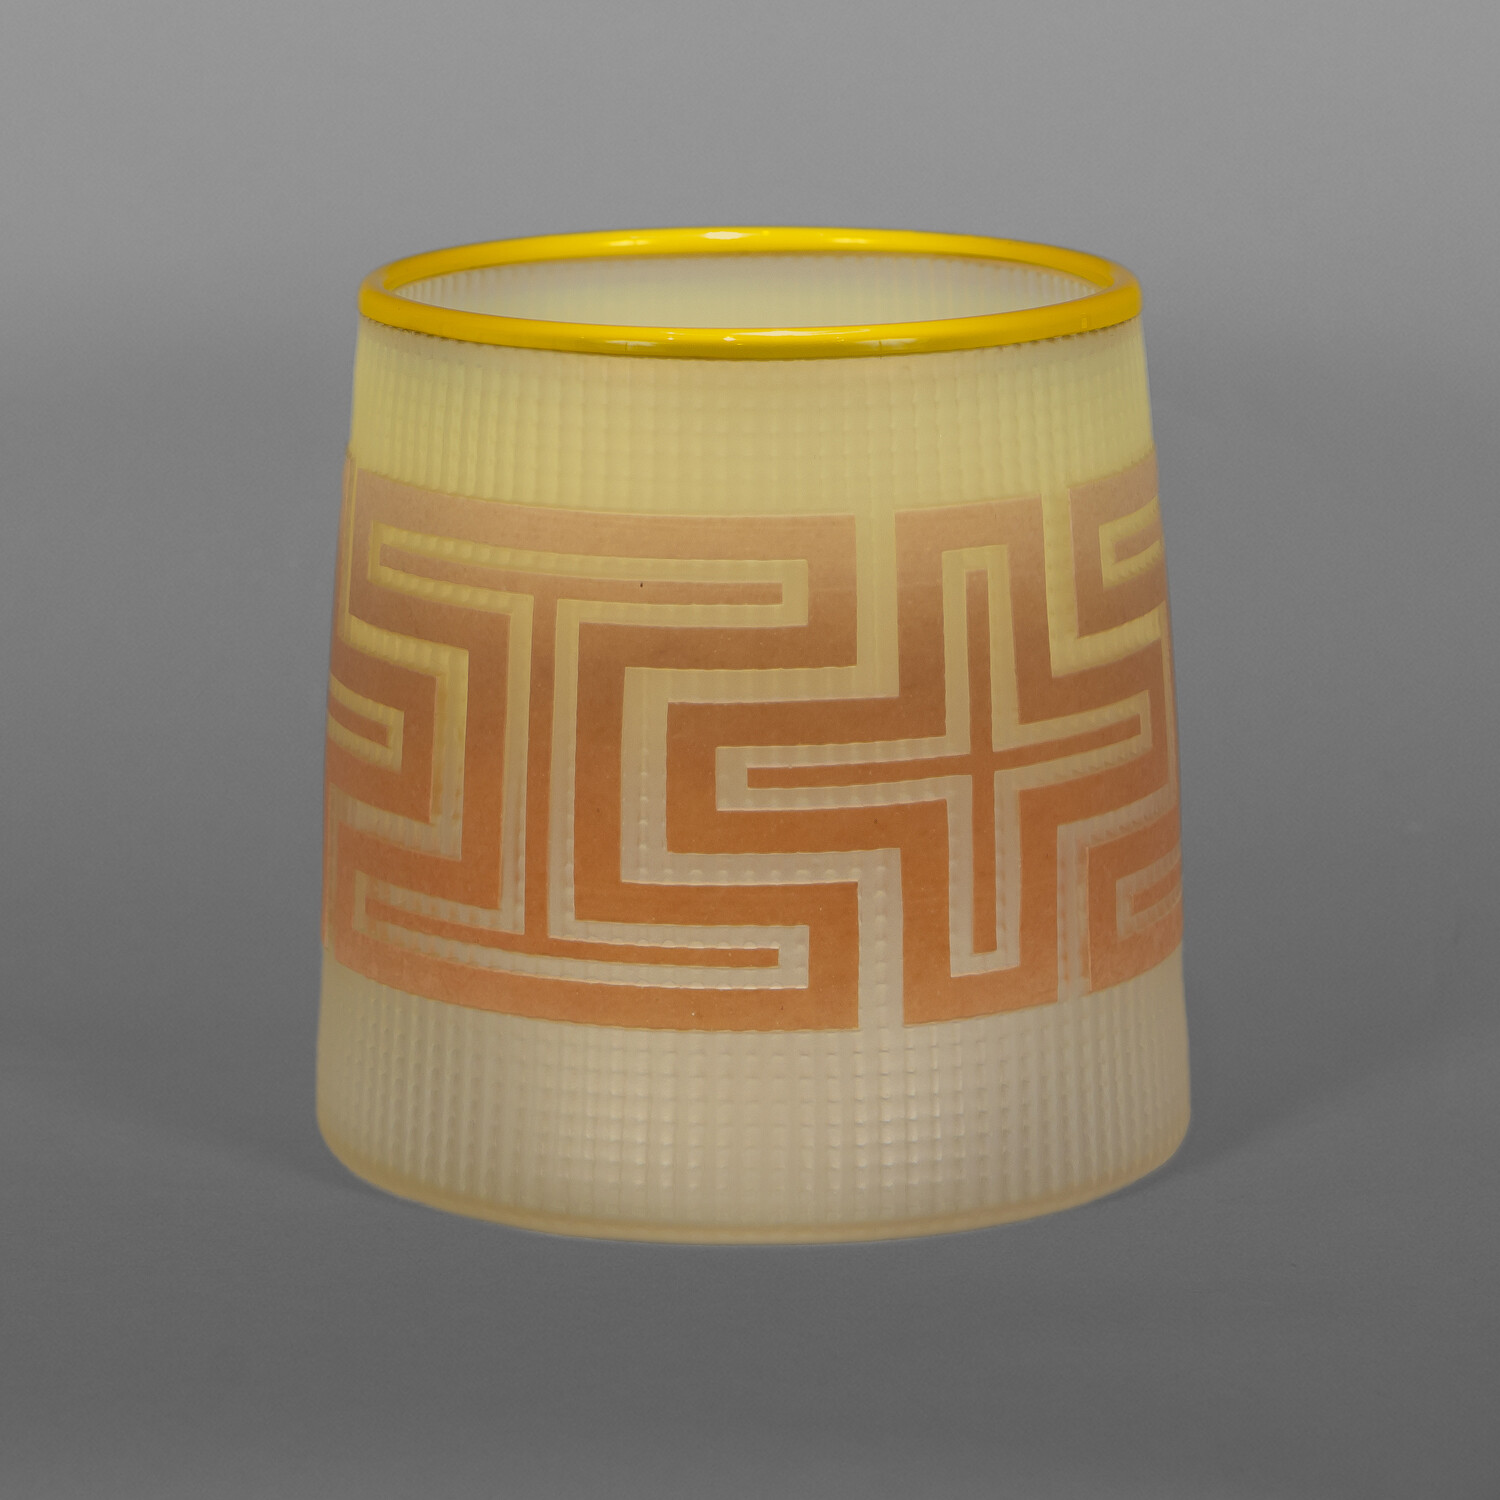 Cream & Yellow Basket
Preston Singletary
TlingitBlown & sand-carved glass
5¼" x 4½"
$3500